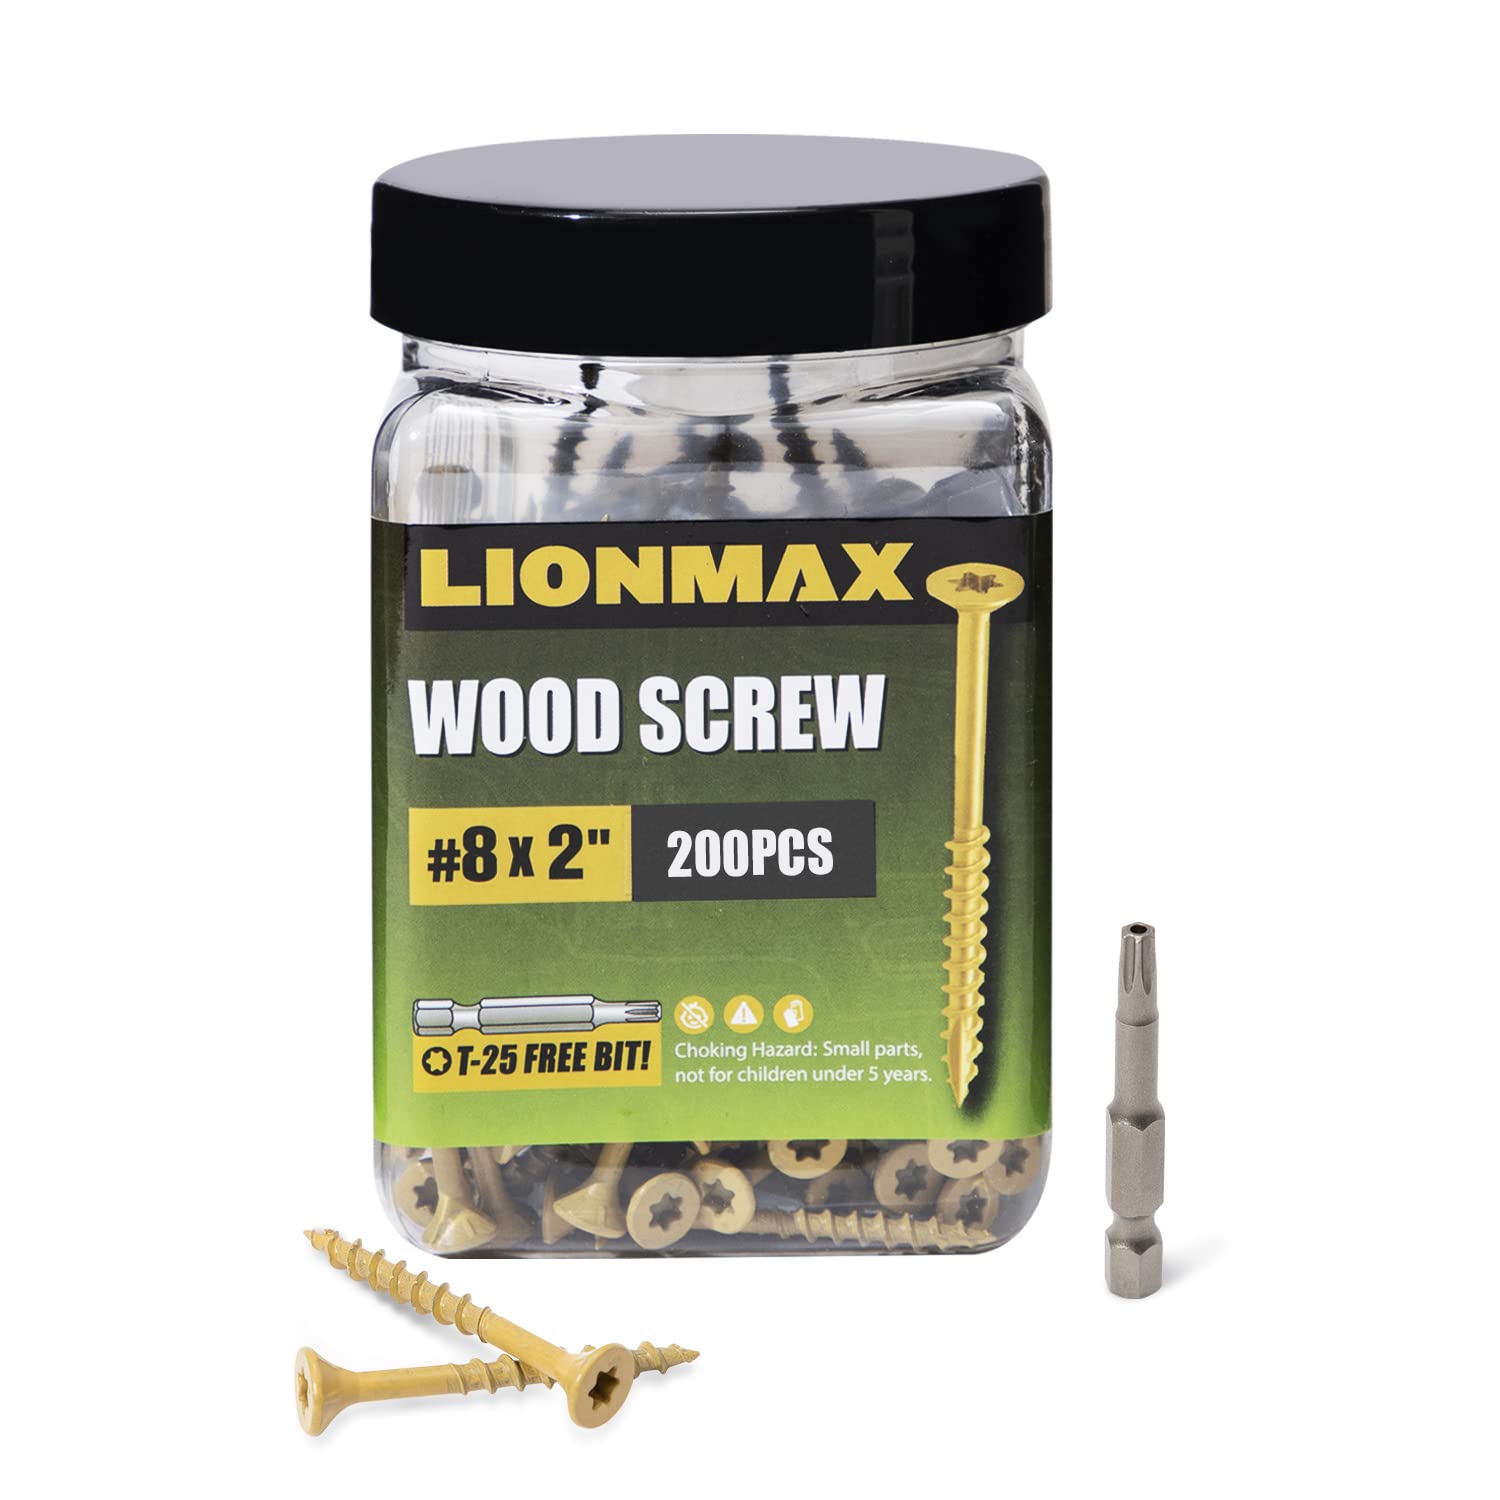 LIONMAX Wood Screws #8 x 2